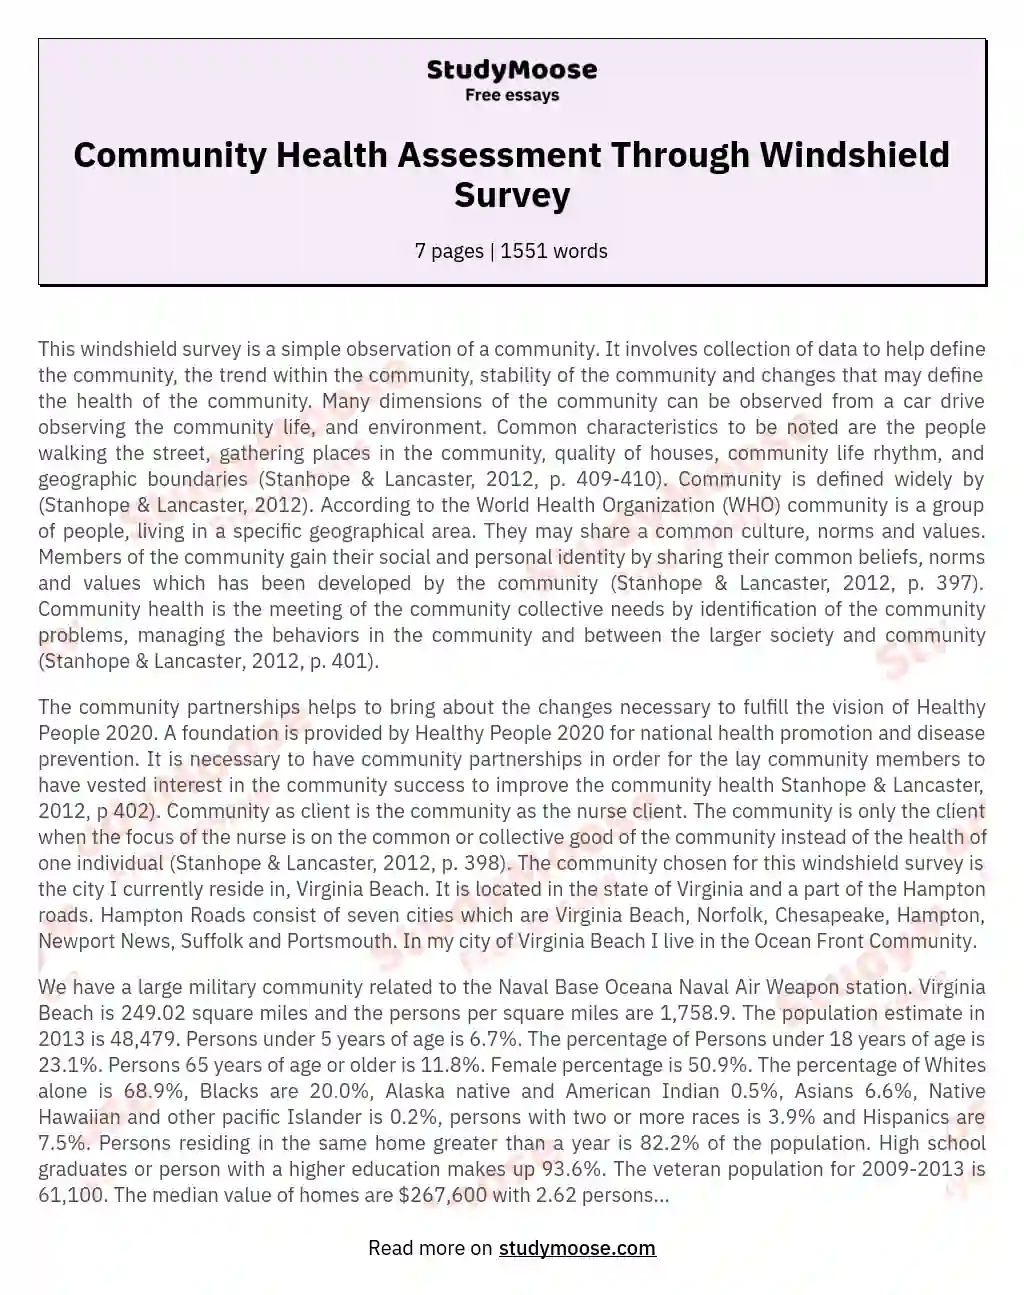 Community Health Assessment Through Windshield Survey essay